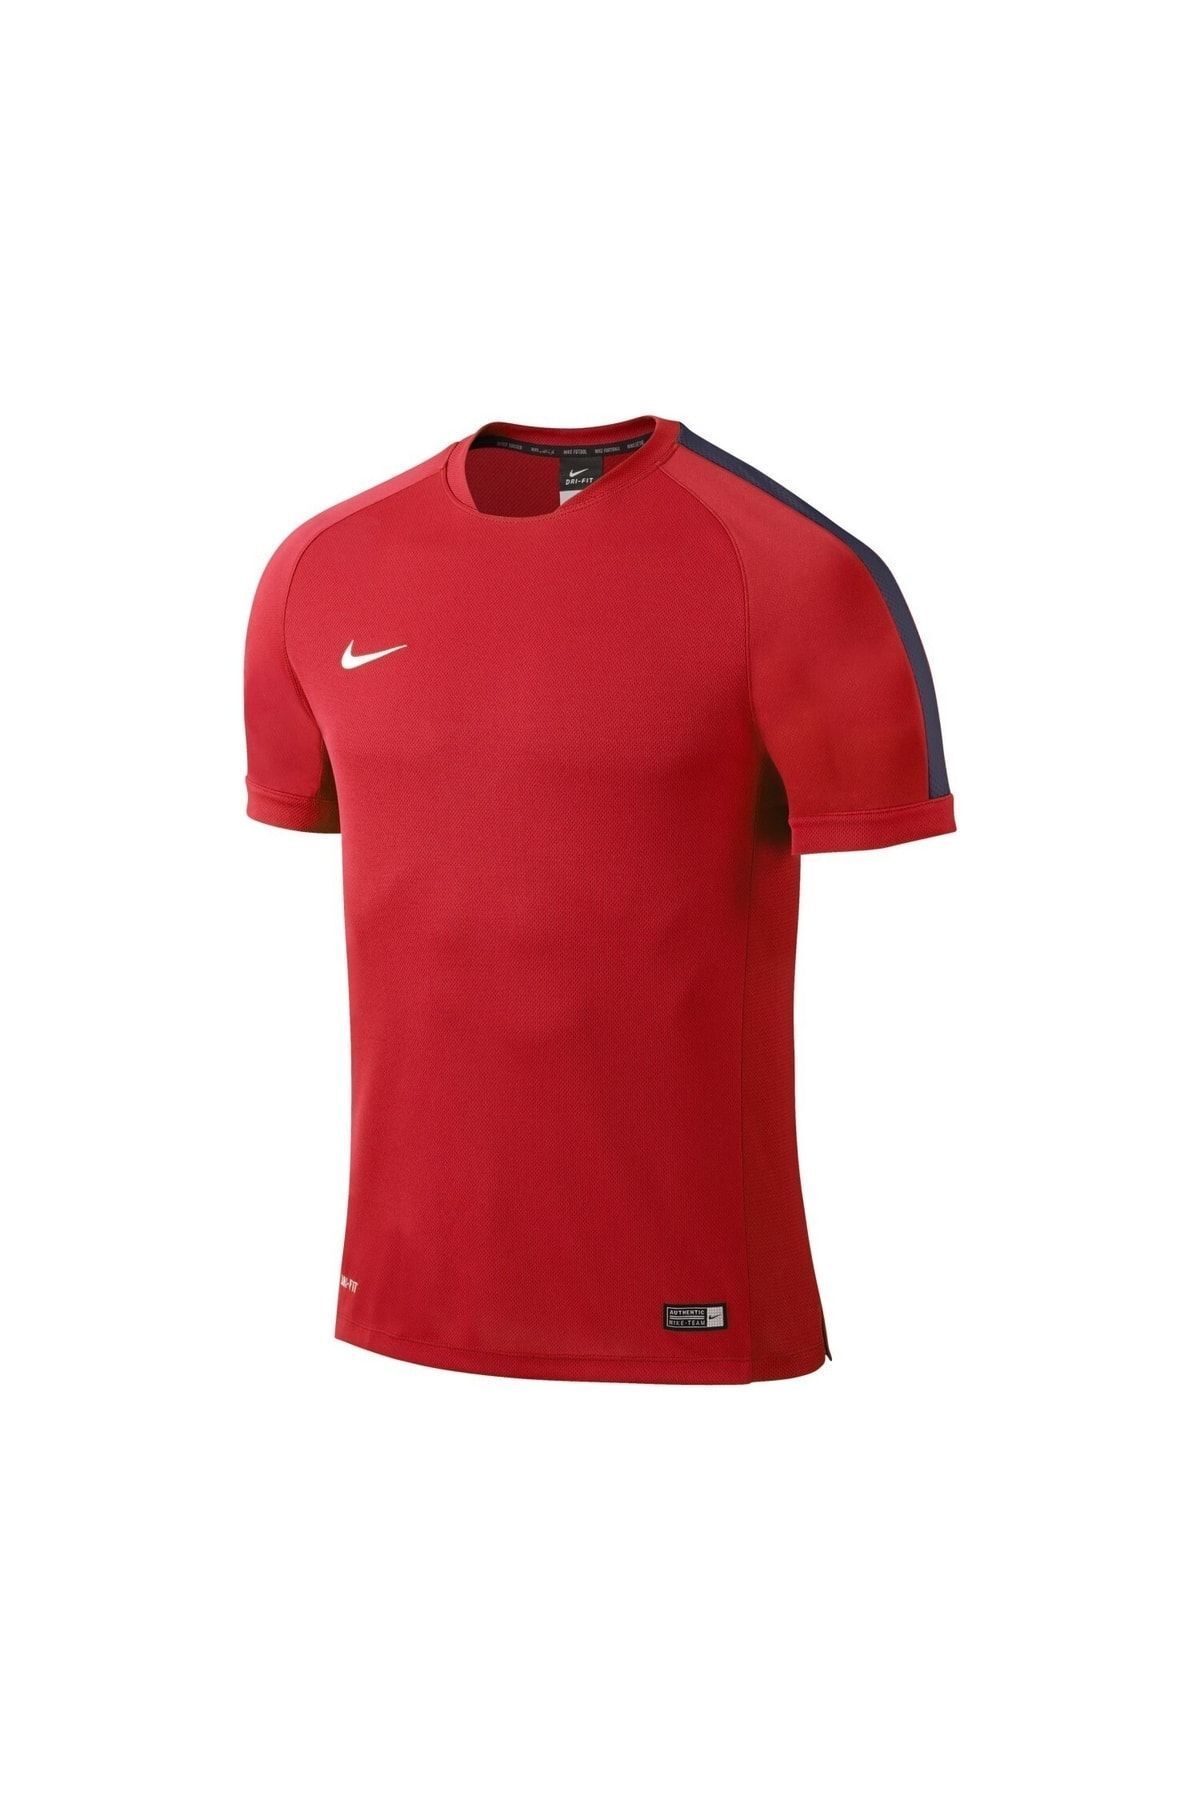 Nike Squad 15 Flash Training Top Çocuk Kırmızı T-shirt 646401-662 Turuncu